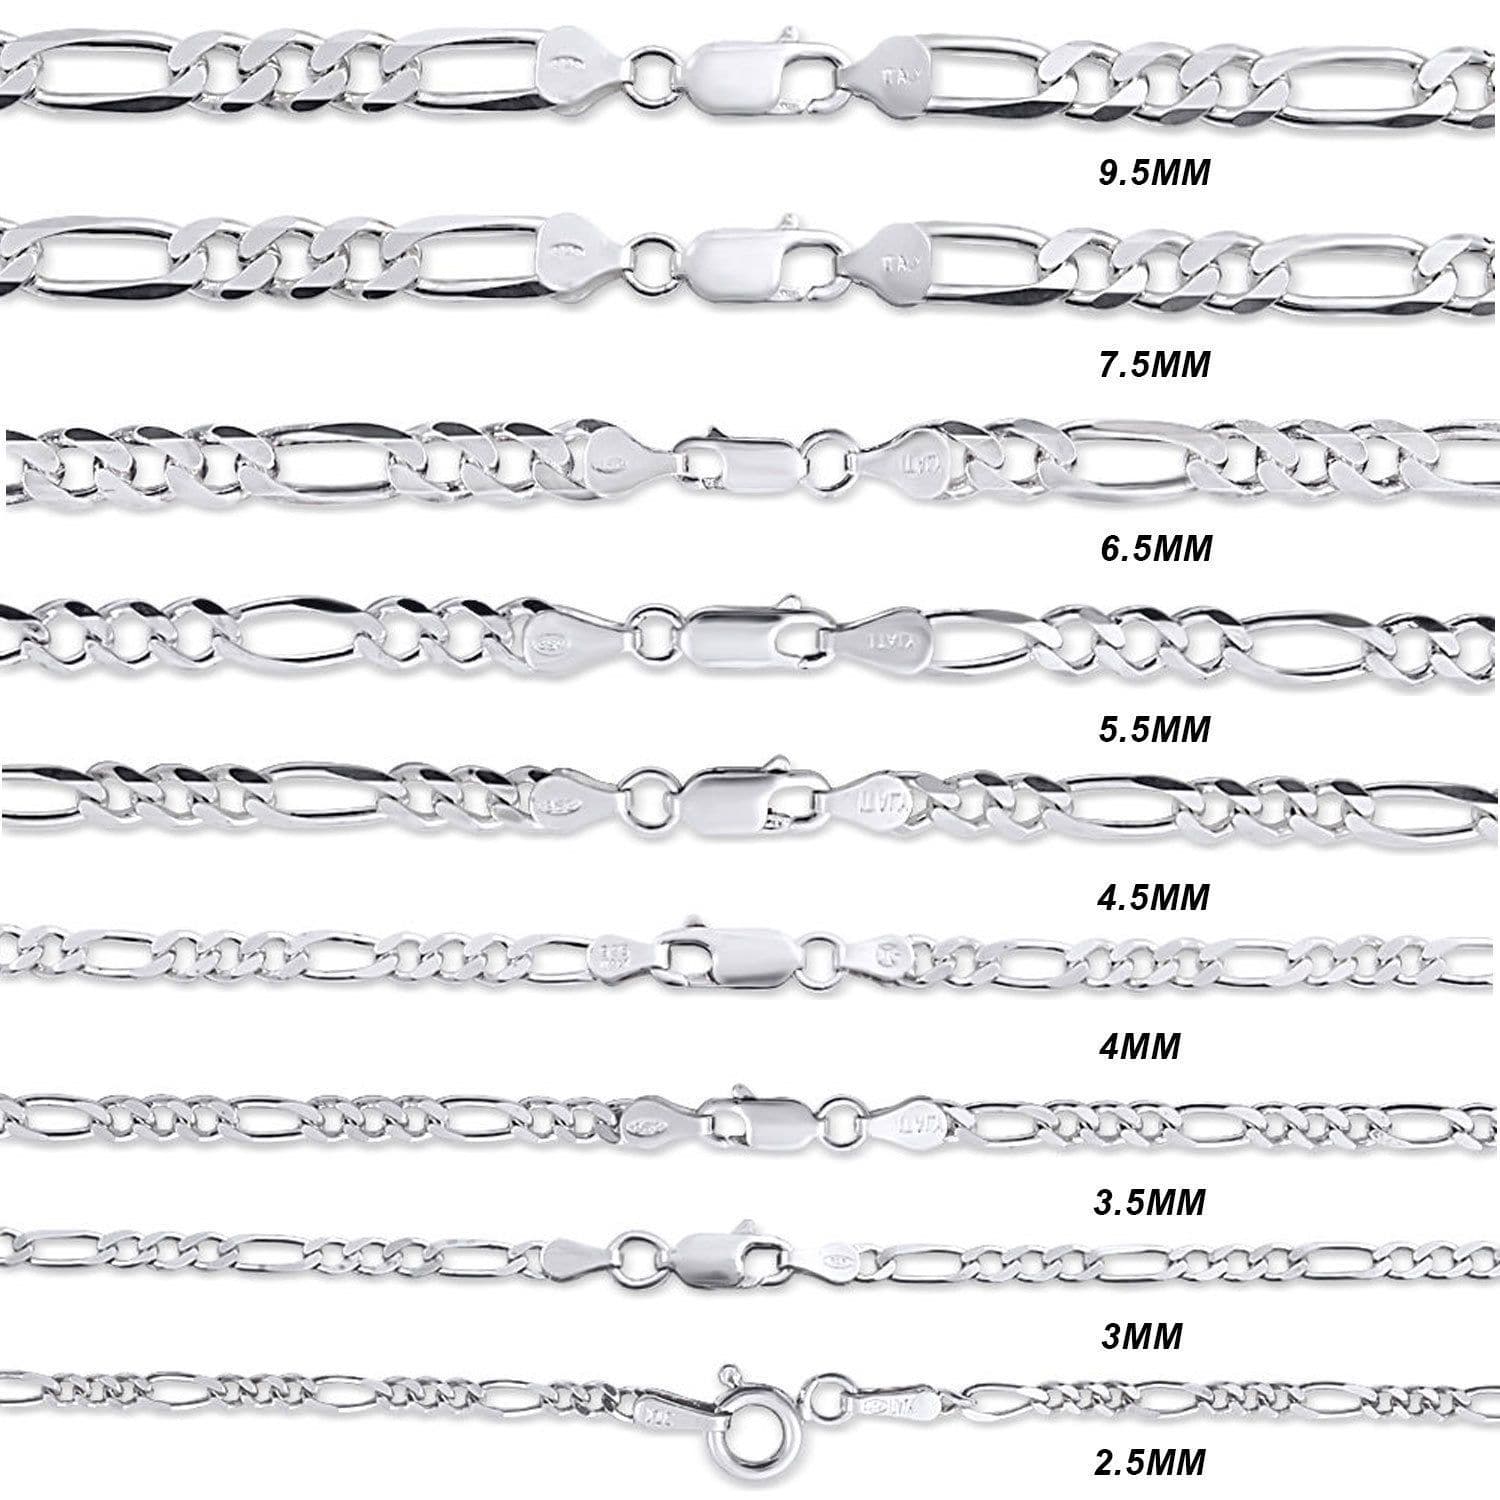 3MM 925 Sterling Silver Figaro Link Chain Necklace, , Jawa Jewelers, Jawa Jewelers